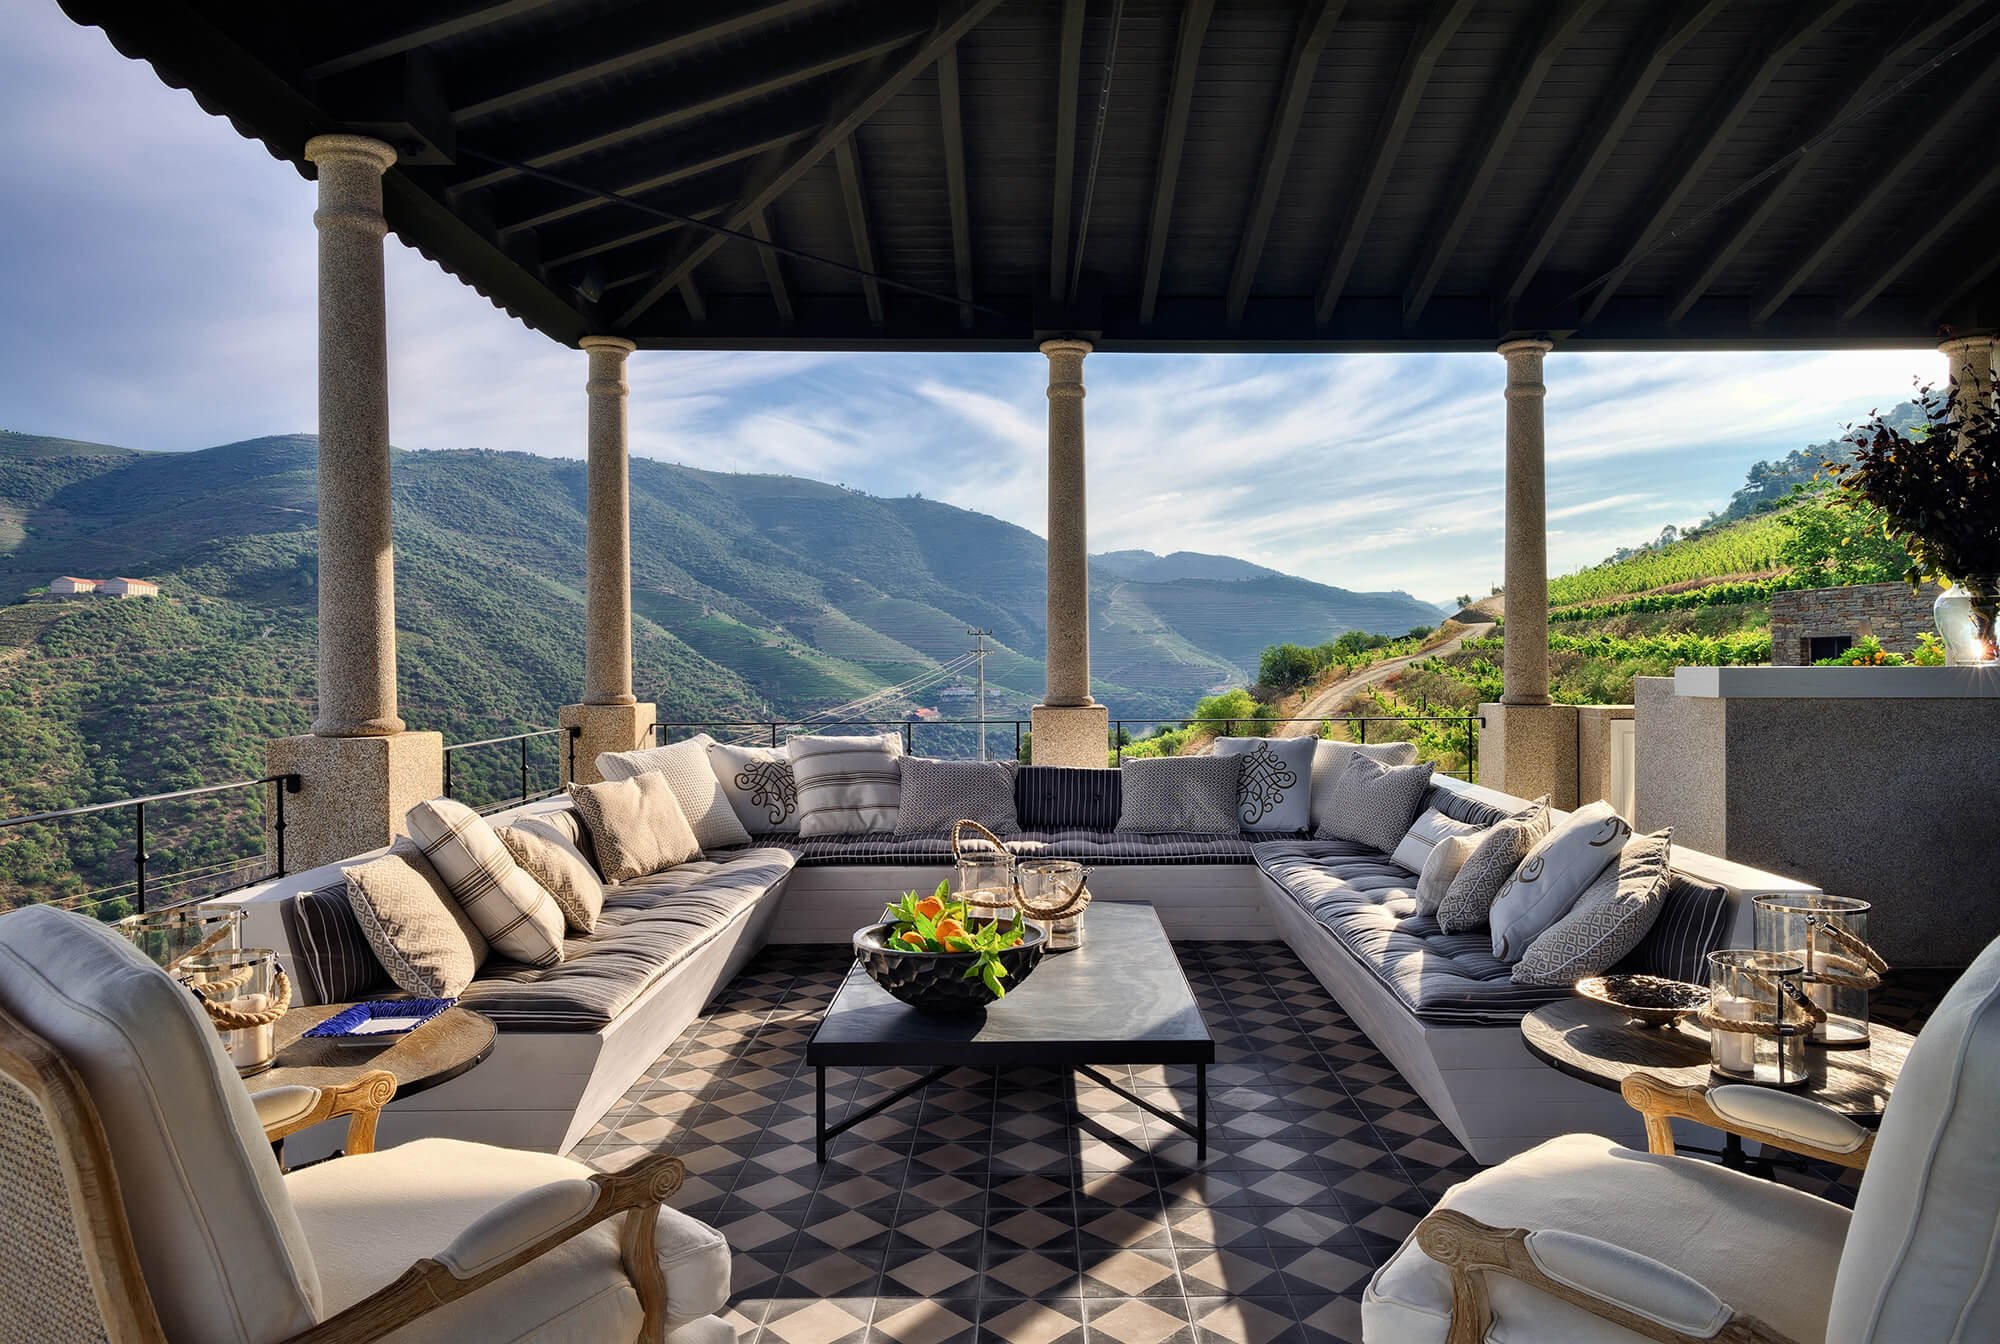 Prestigious wine estate with panoramic view of the Douro Valley